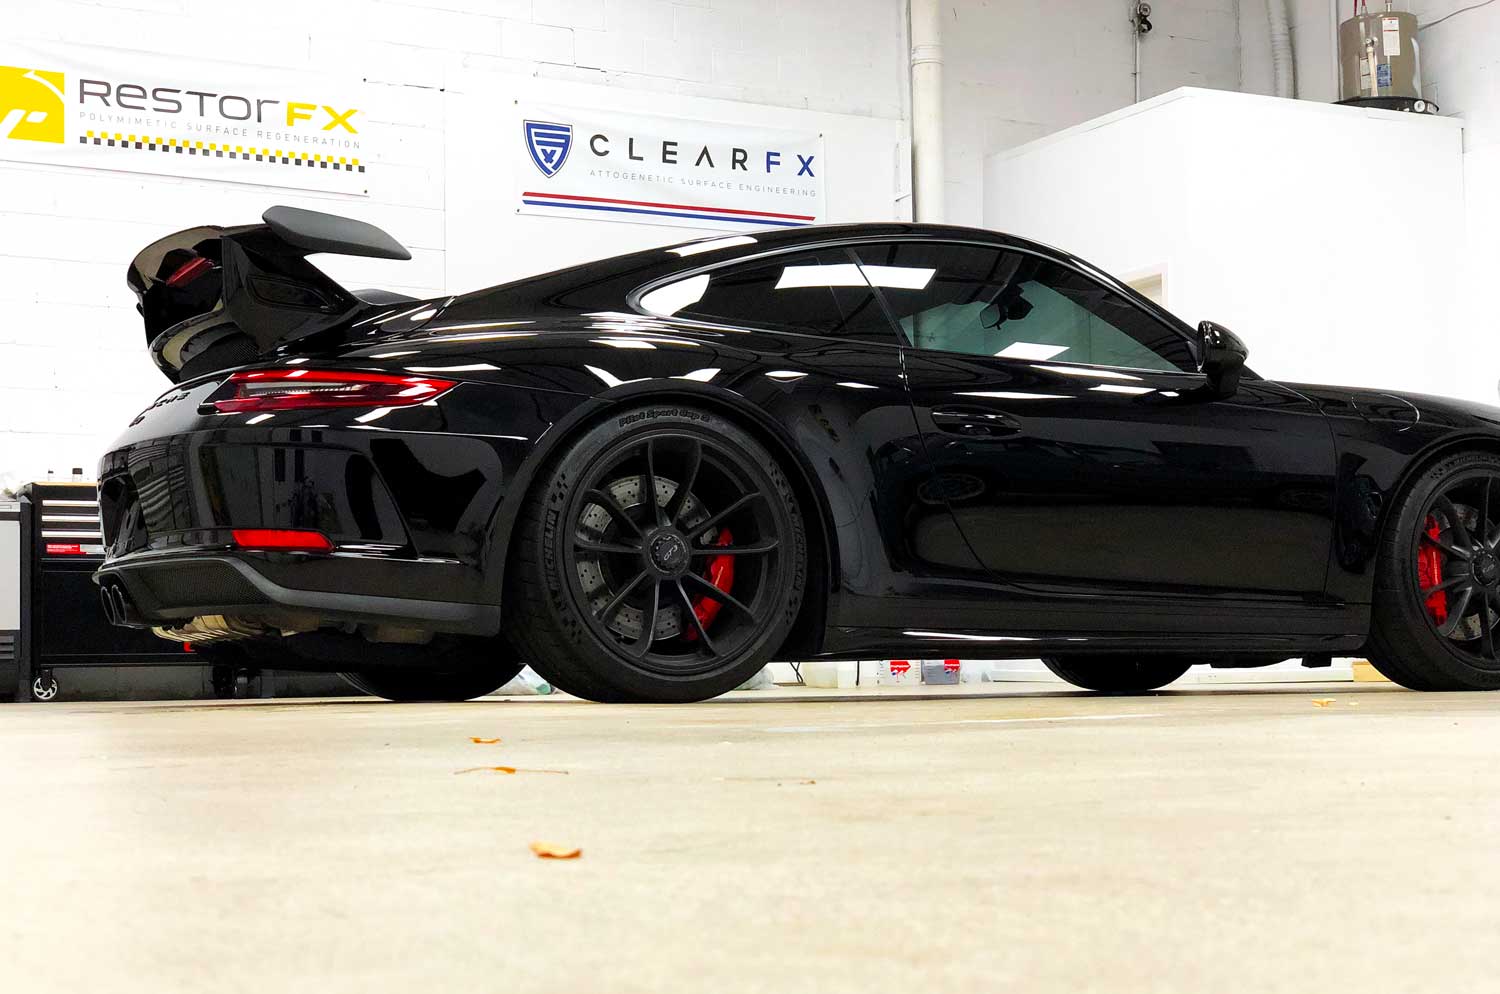 Shiny black Porsche after RestorFX application at brightly lit RestorFX Mississauga shop area